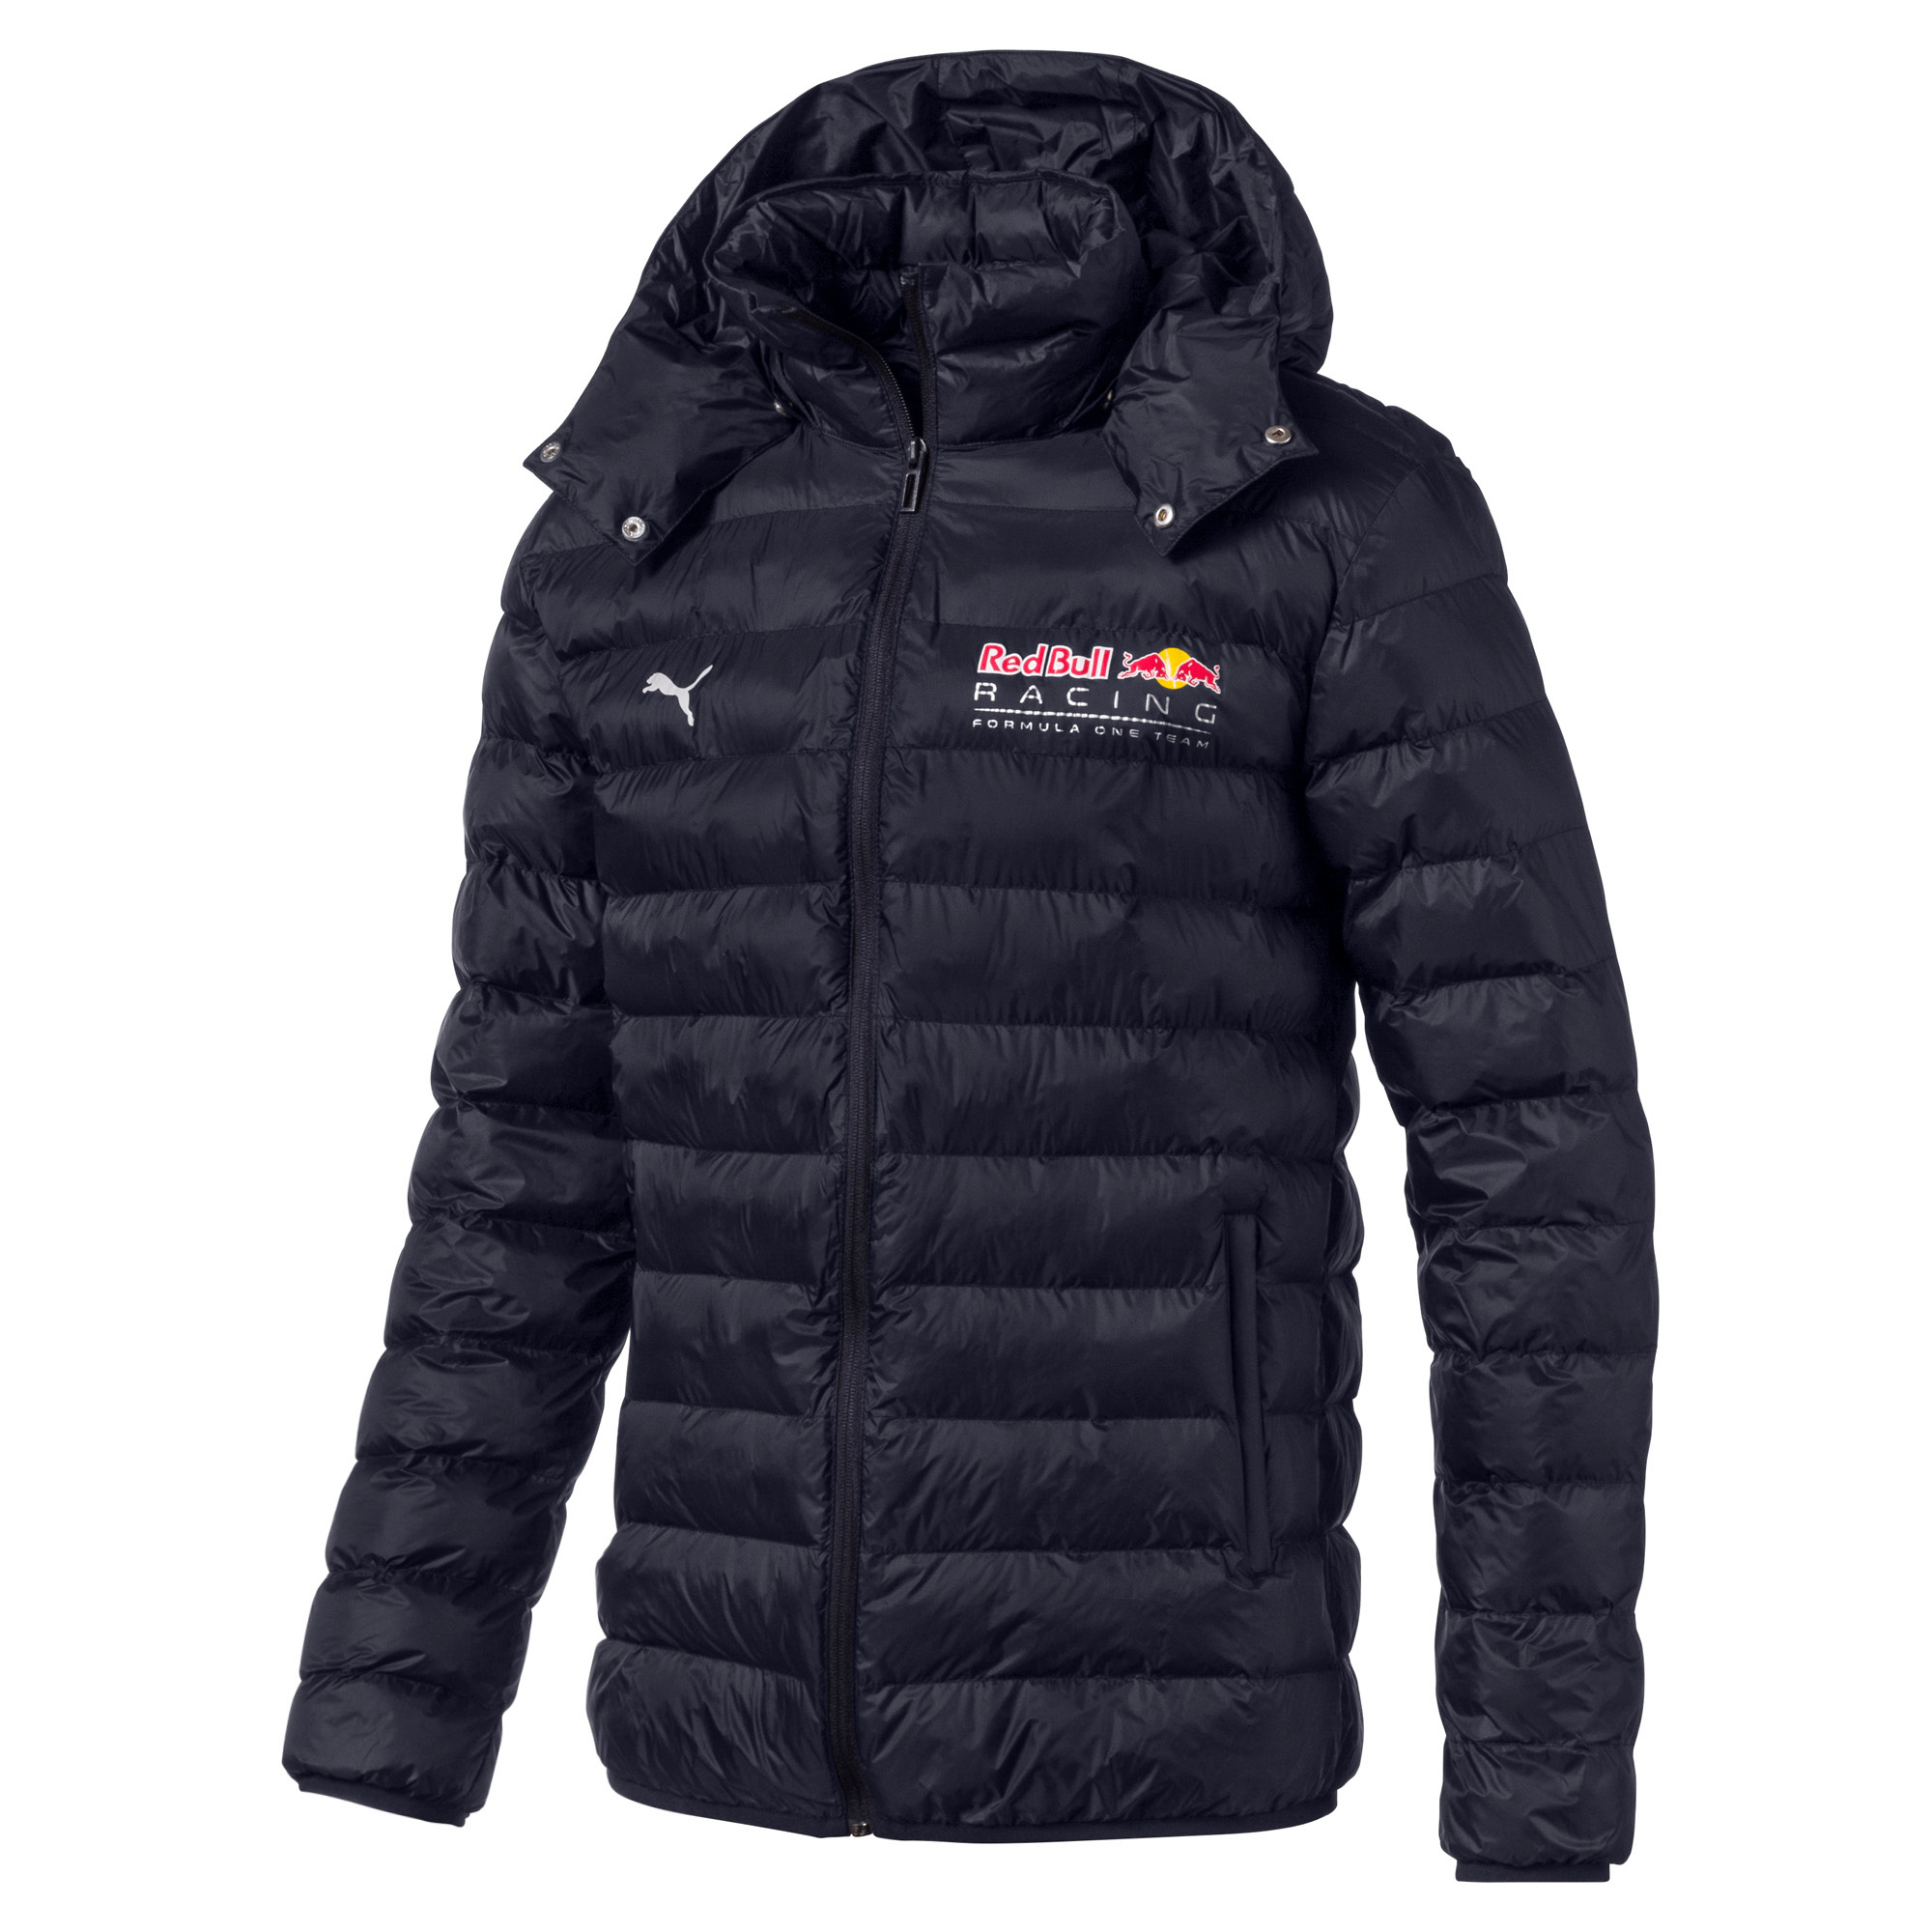  Red Bull Racing Eco PackLITE Jacket - Navy 